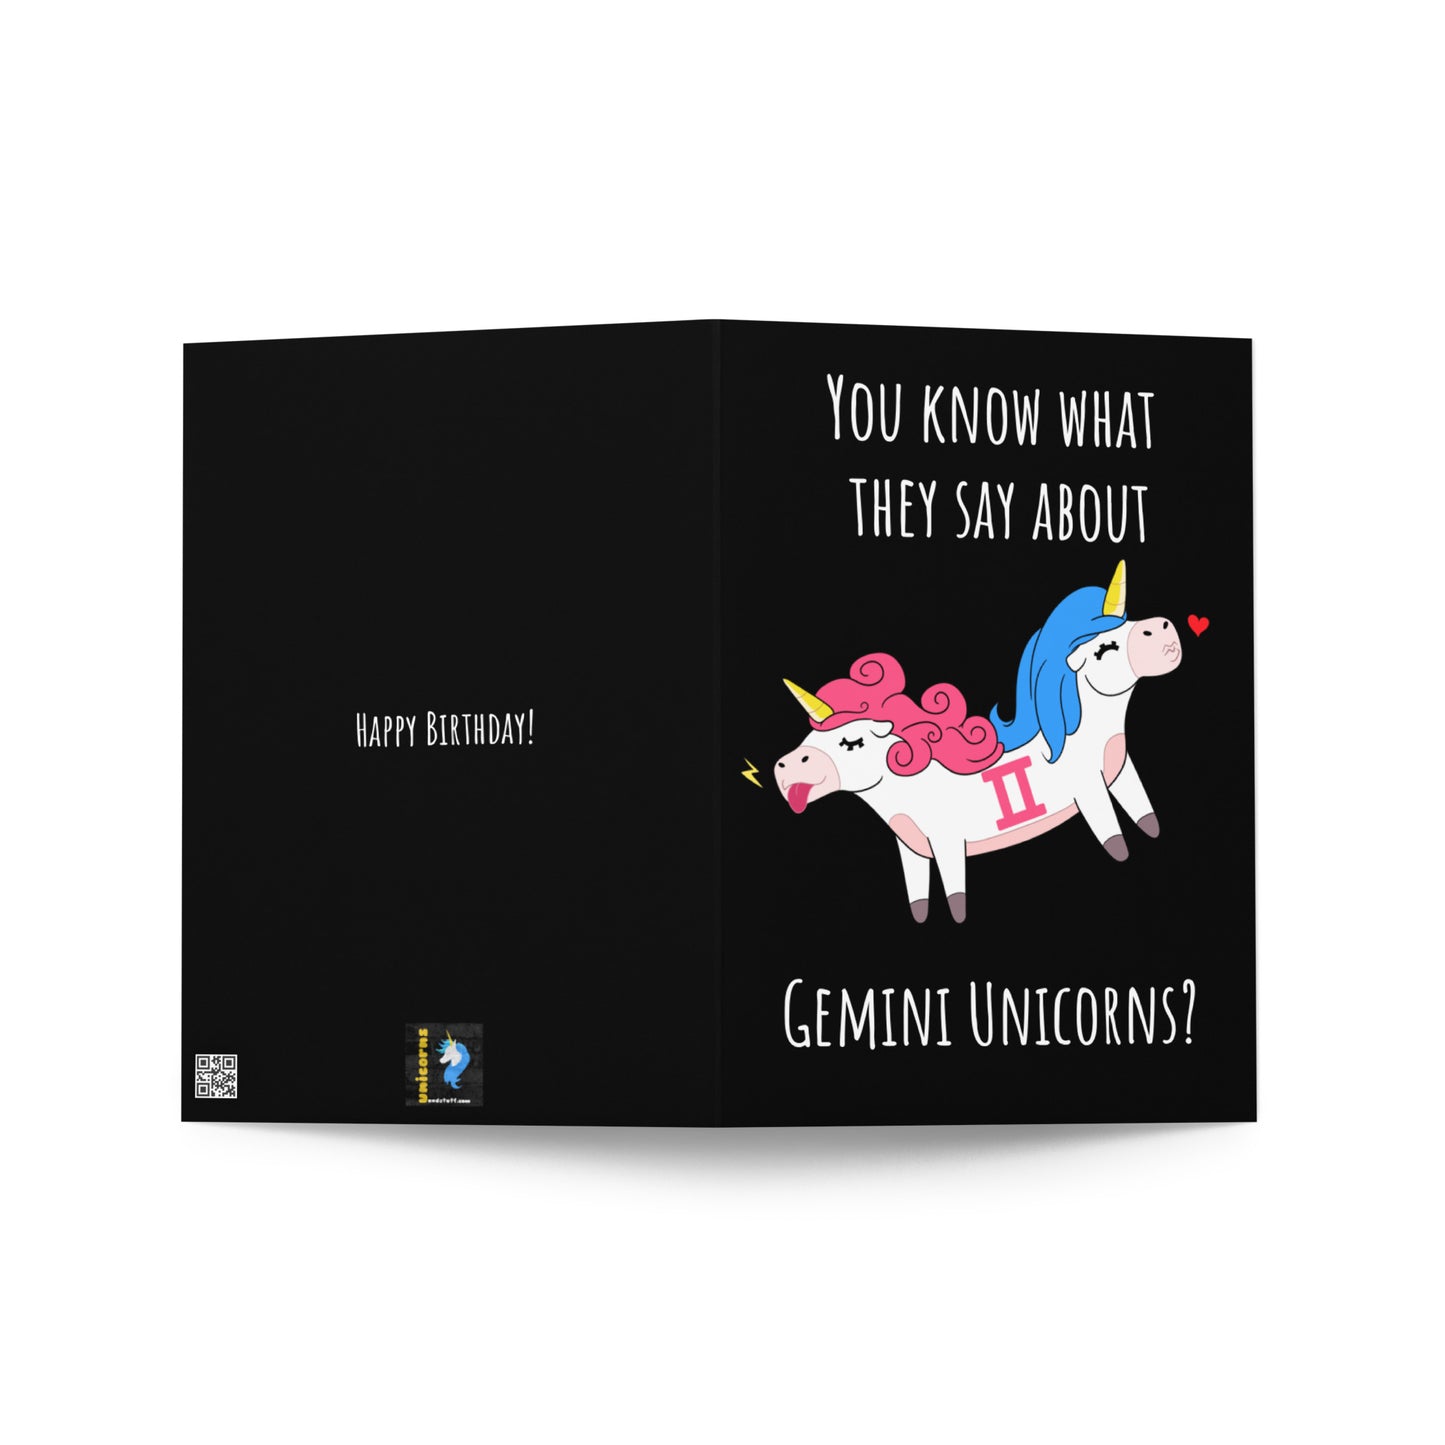 Gemini Unicorn Birthday Greeting Card by #unicorntrends